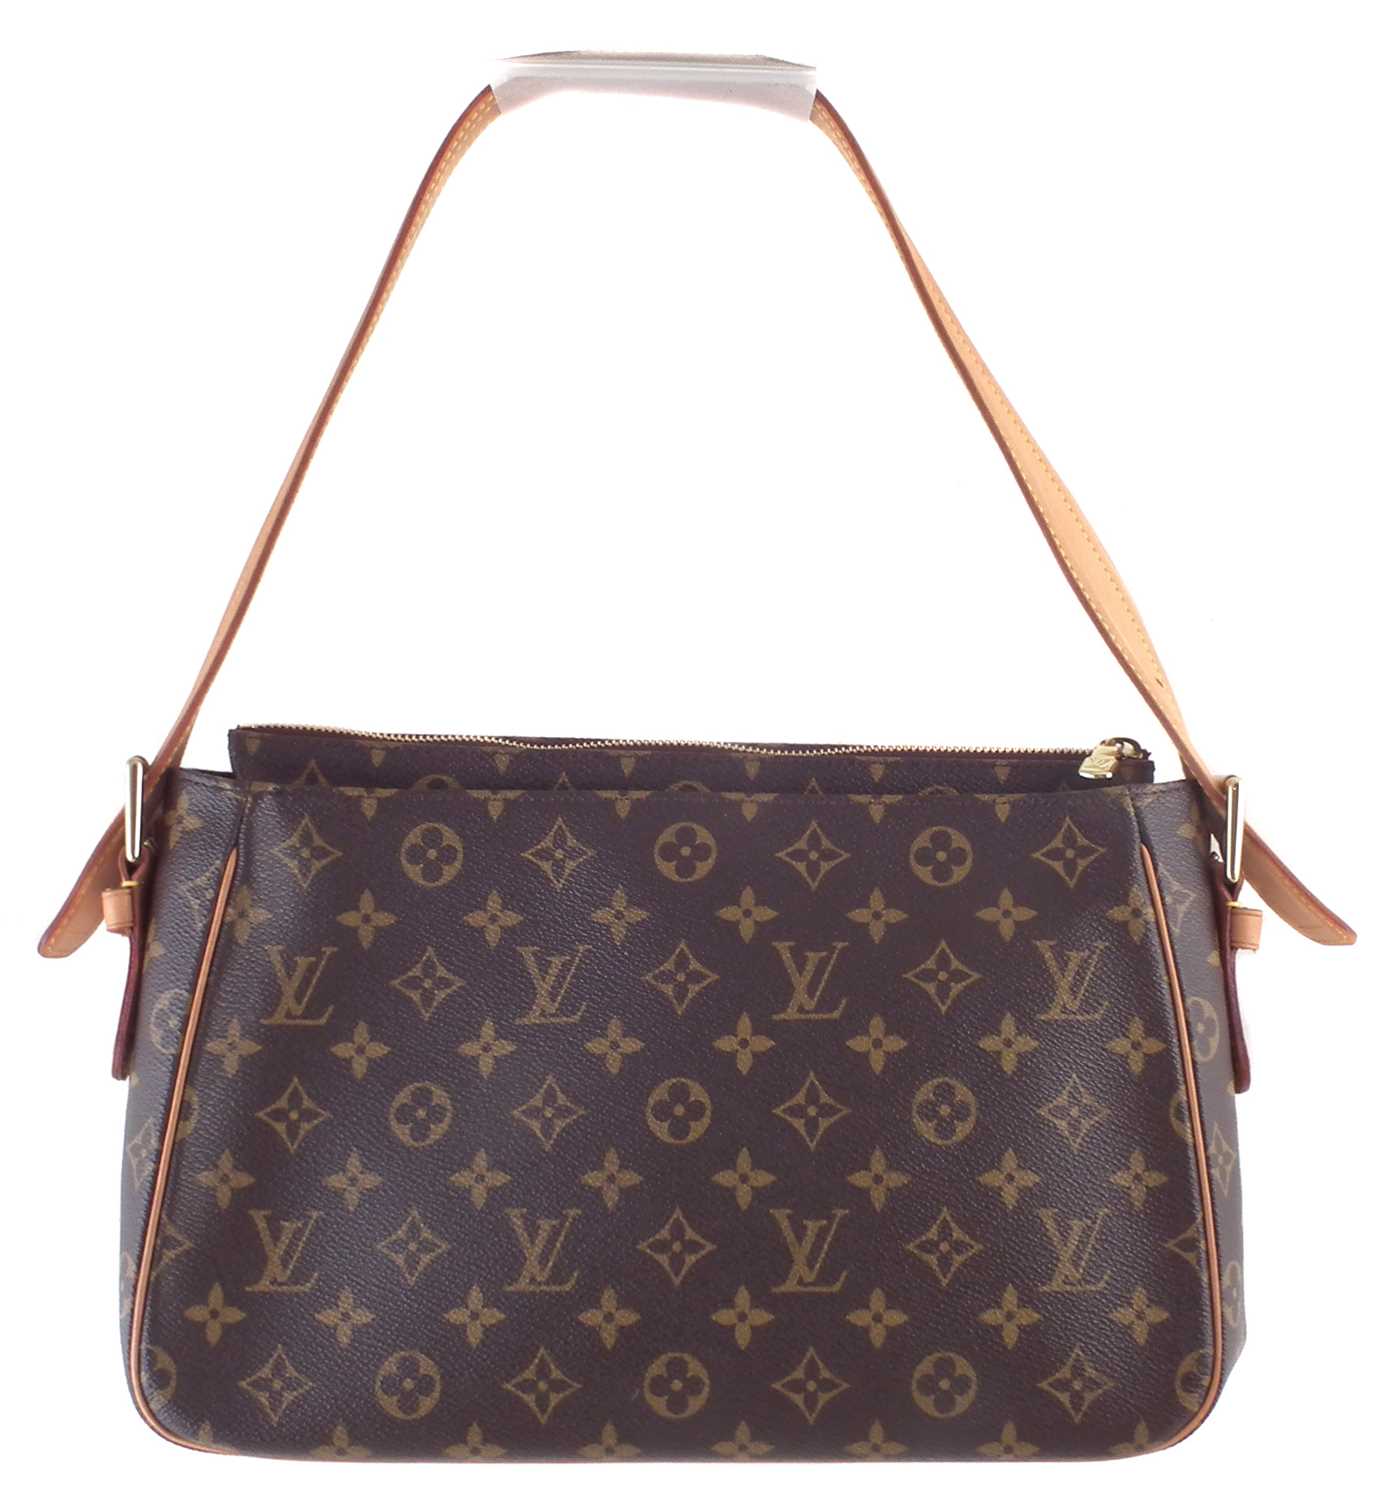 A Louis Vuitton Monogram Viva Cite GM handbag, - Image 2 of 2